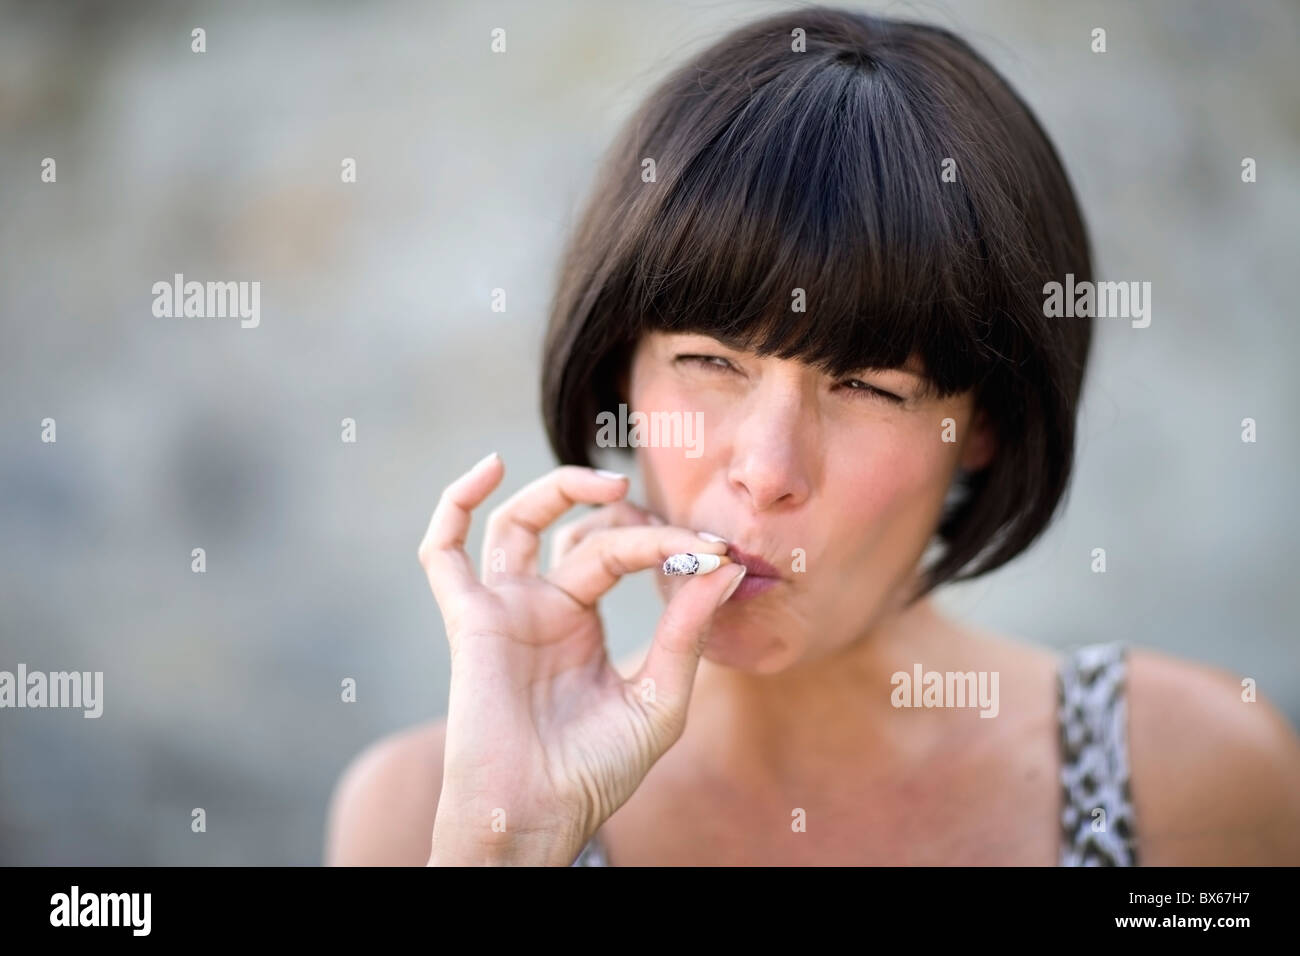 Woman smoking a cigarette Stock Photo